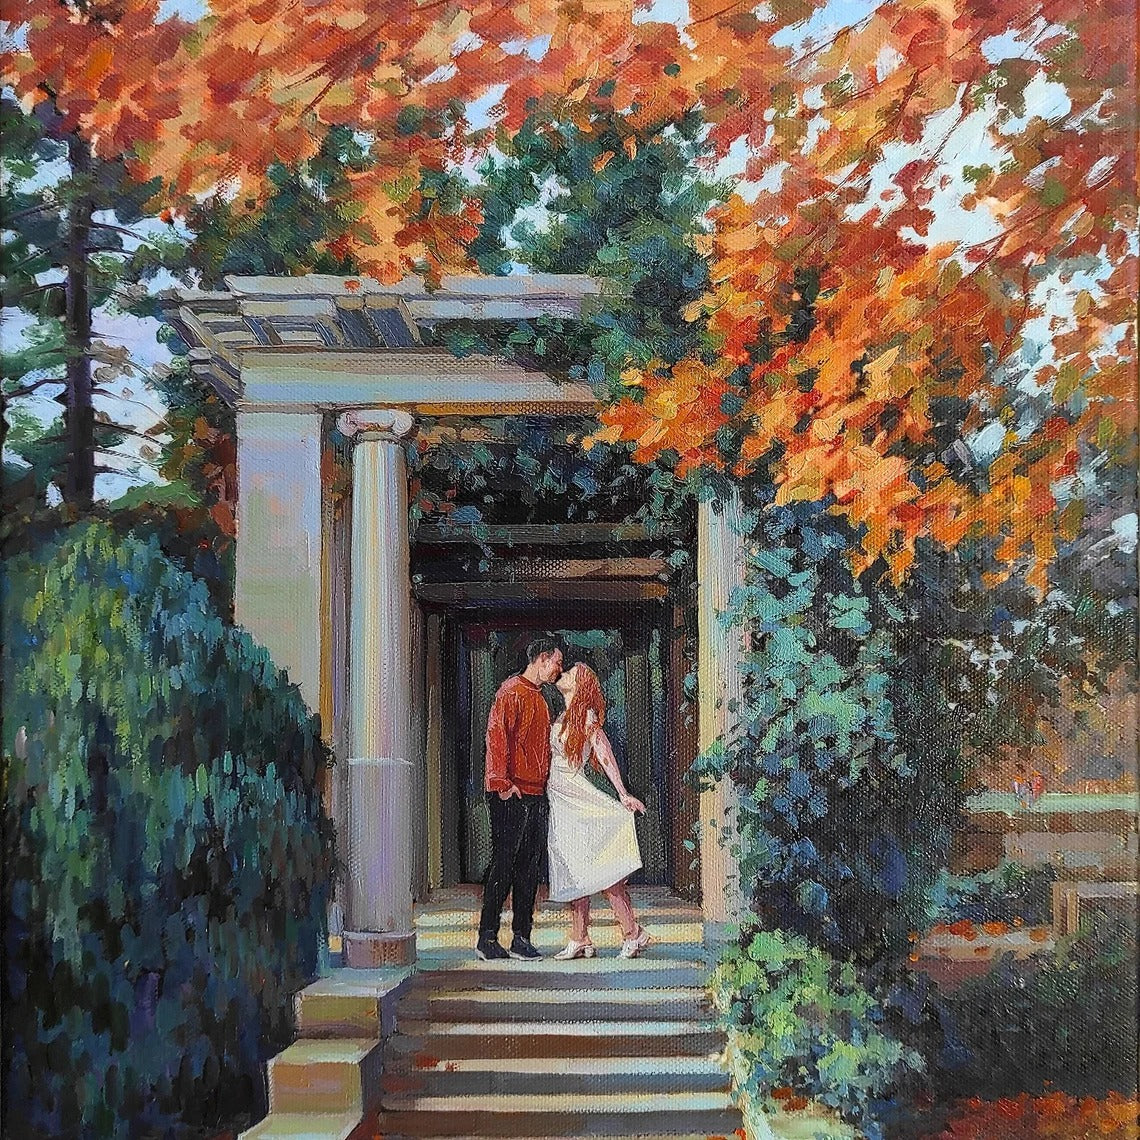 Autumn Romance: The Artwork that Stole Our Hearts